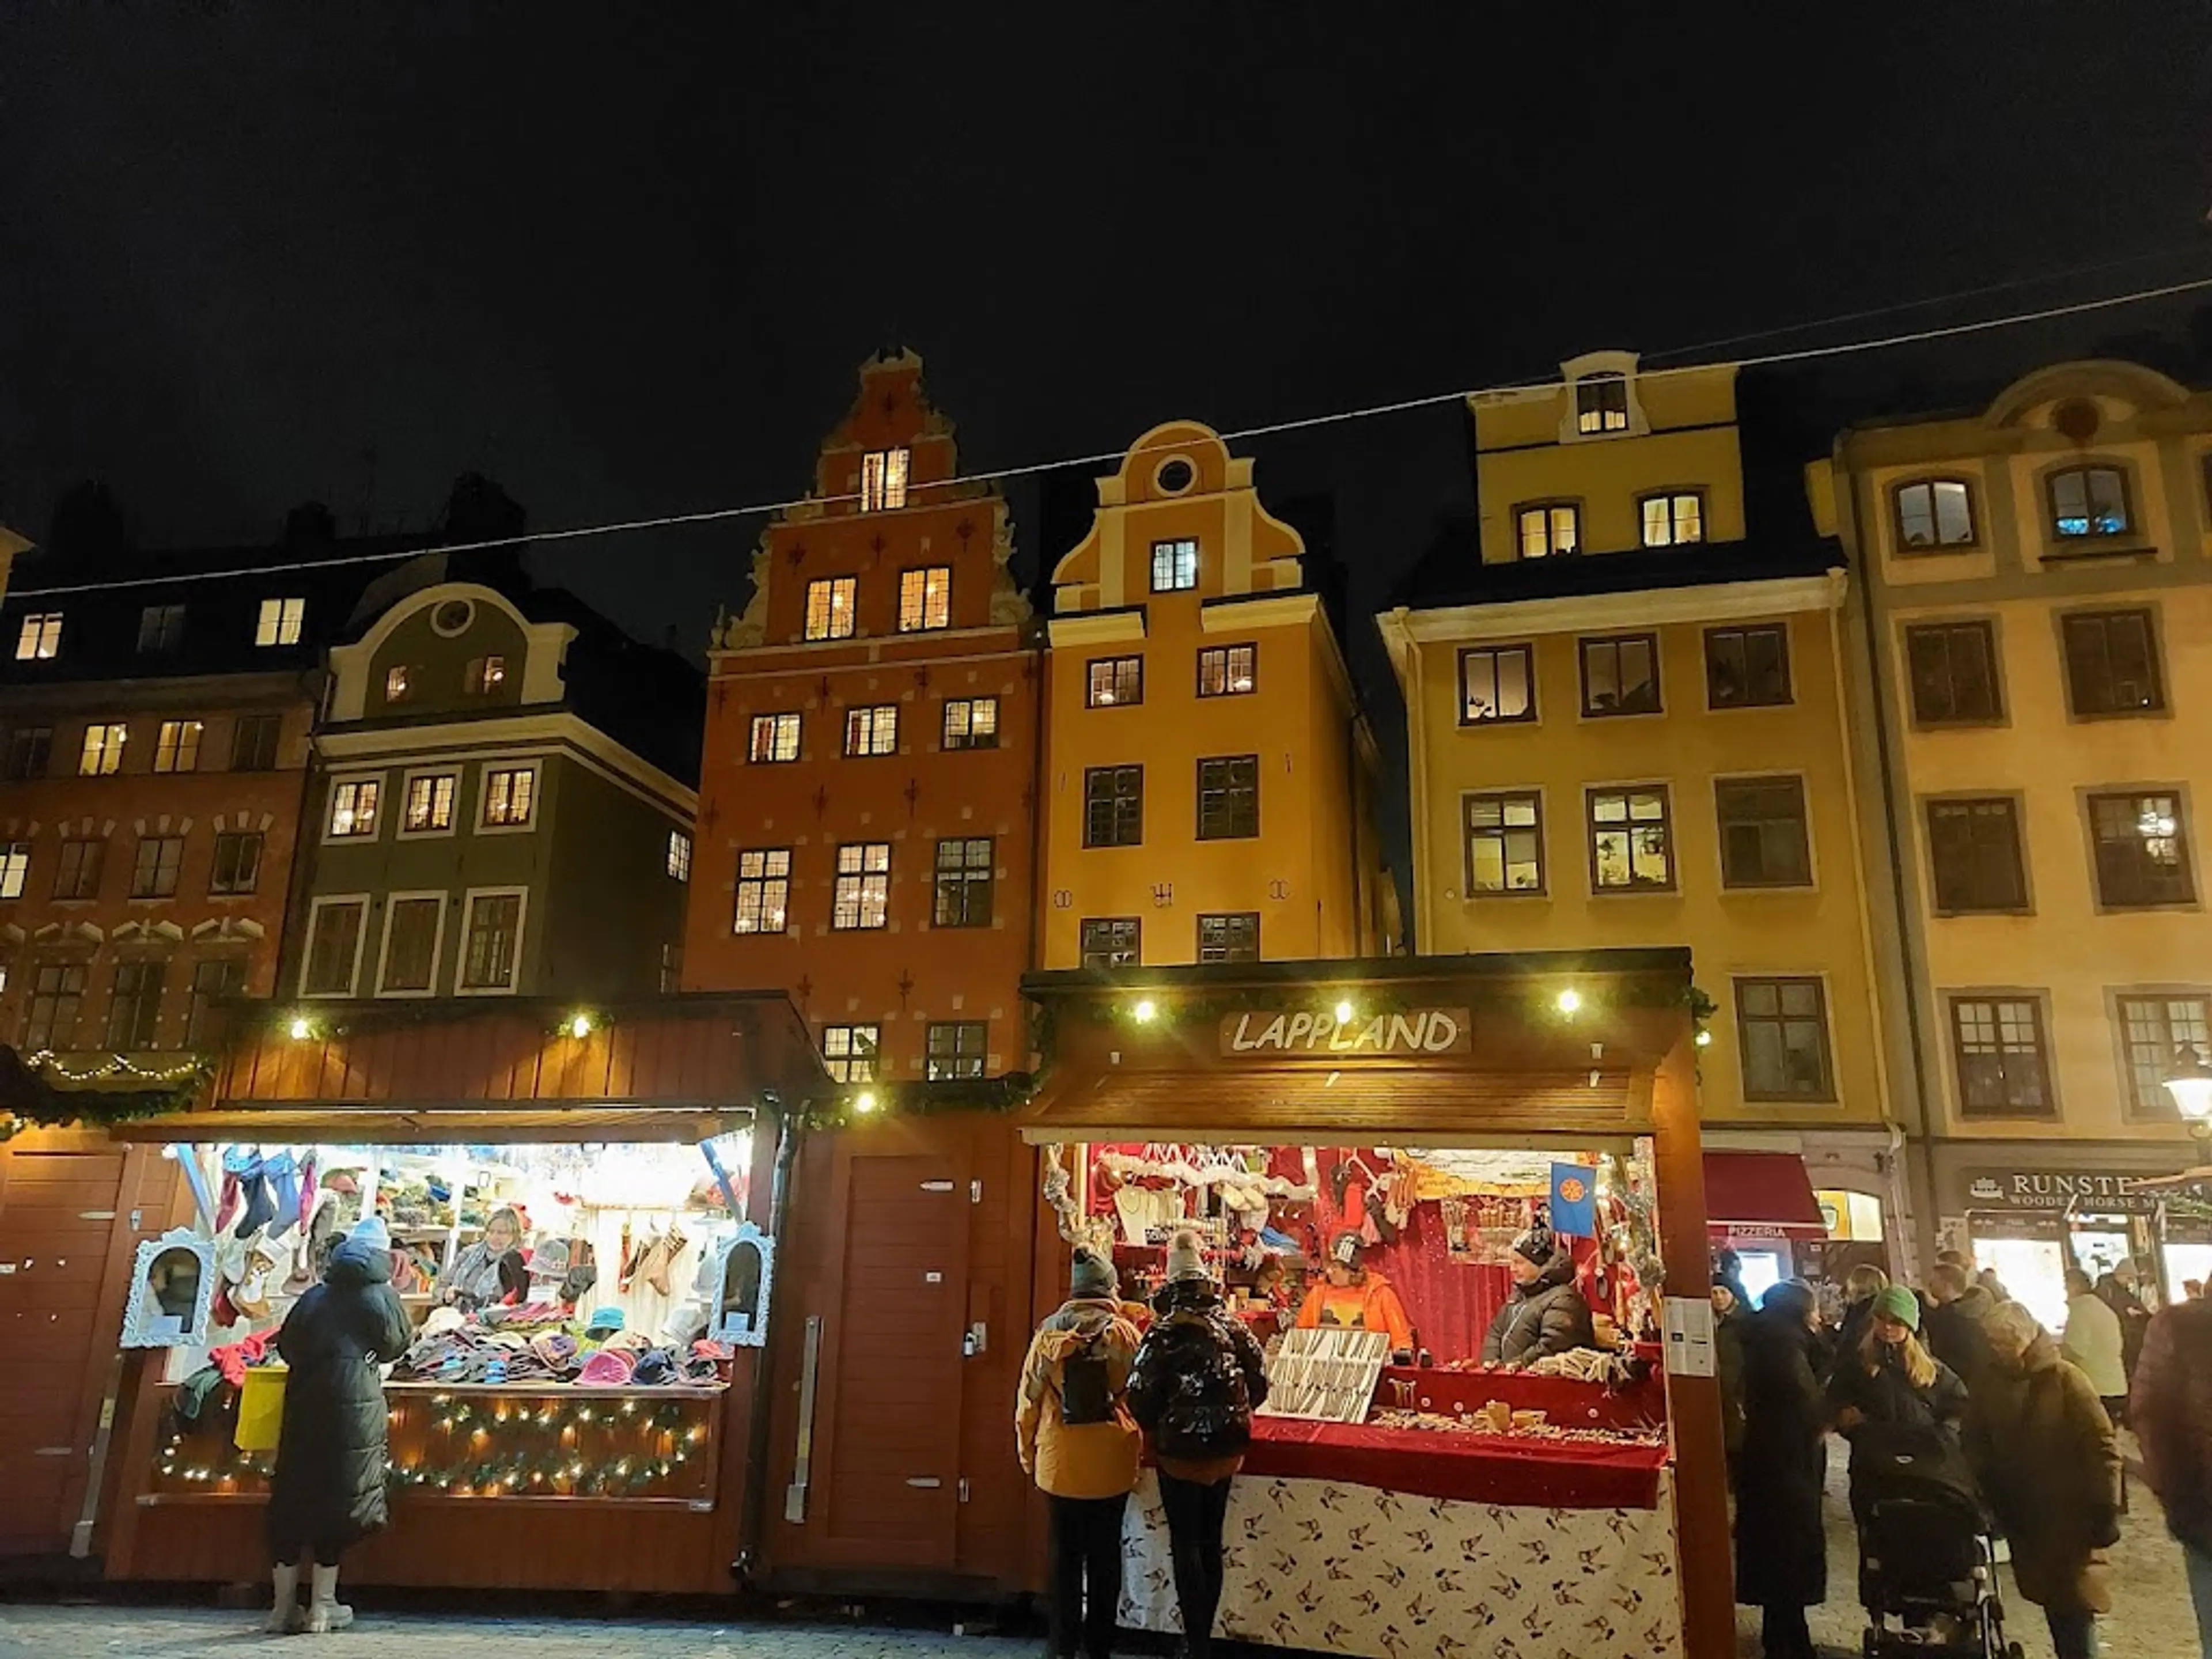 Christmas market at Stortorget square